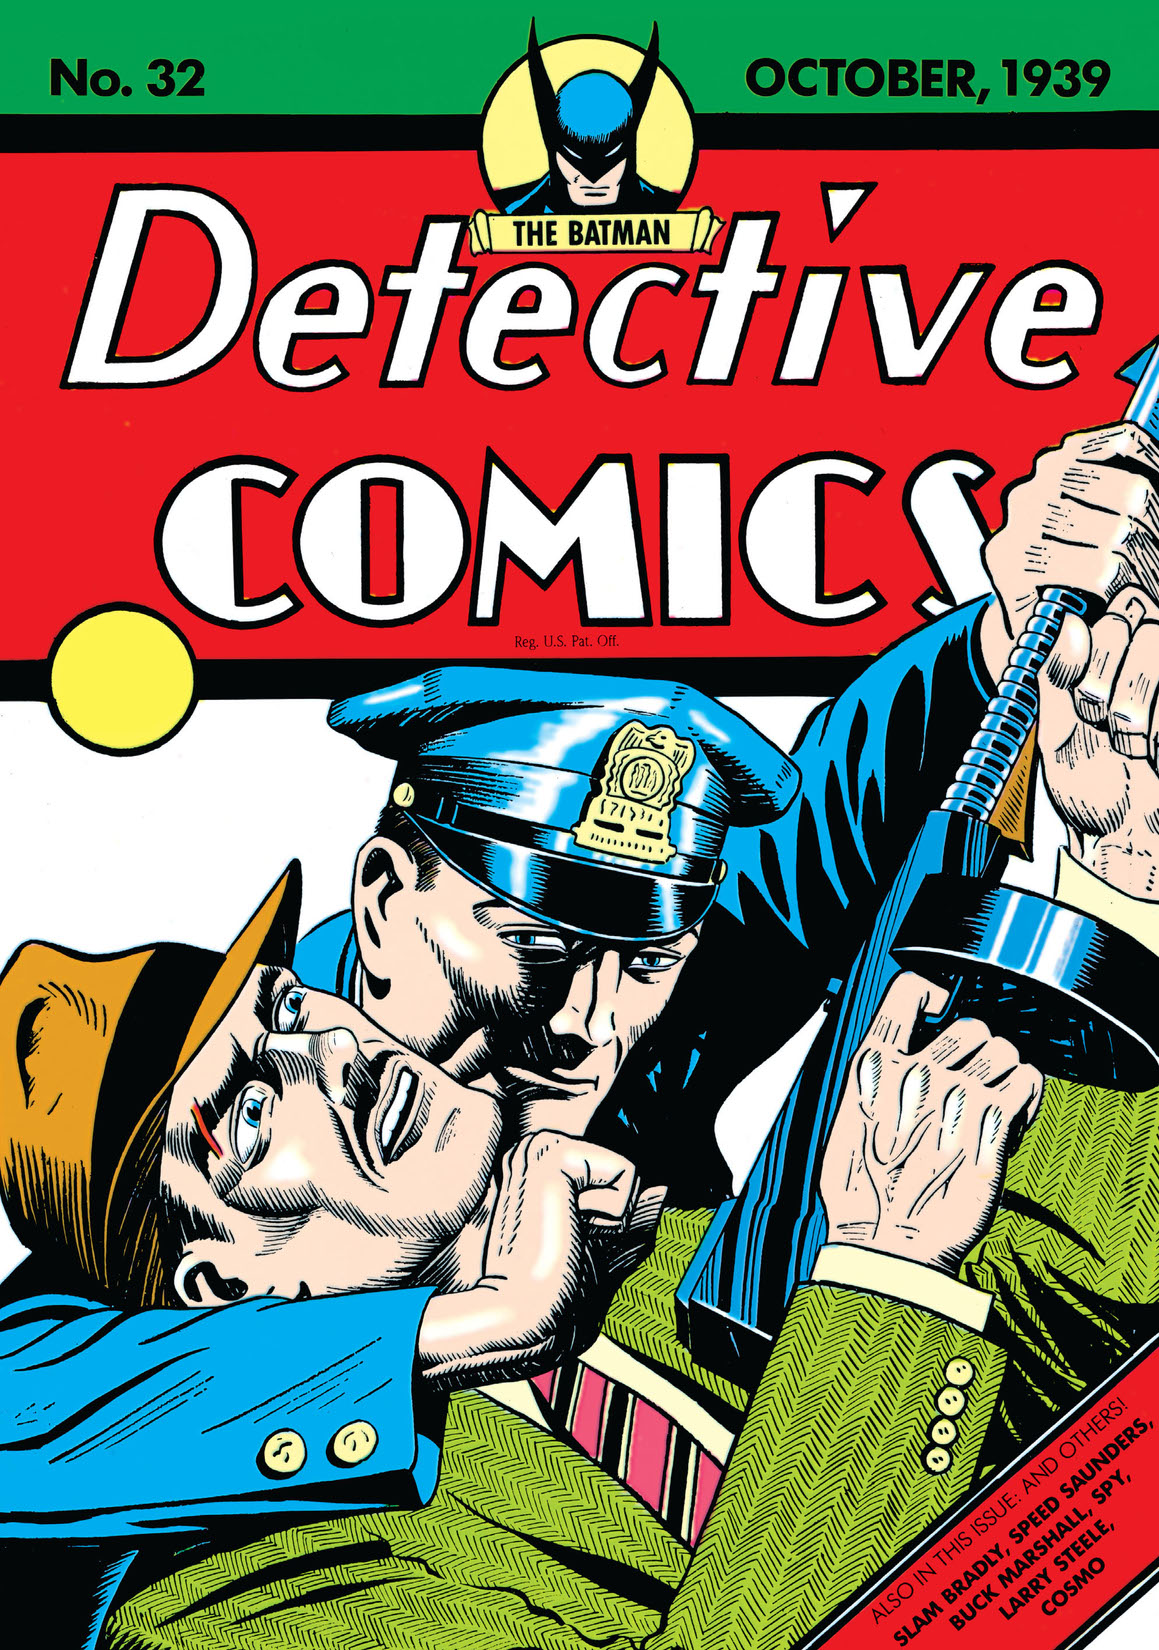 Detective Comics (1937-) #32 preview images